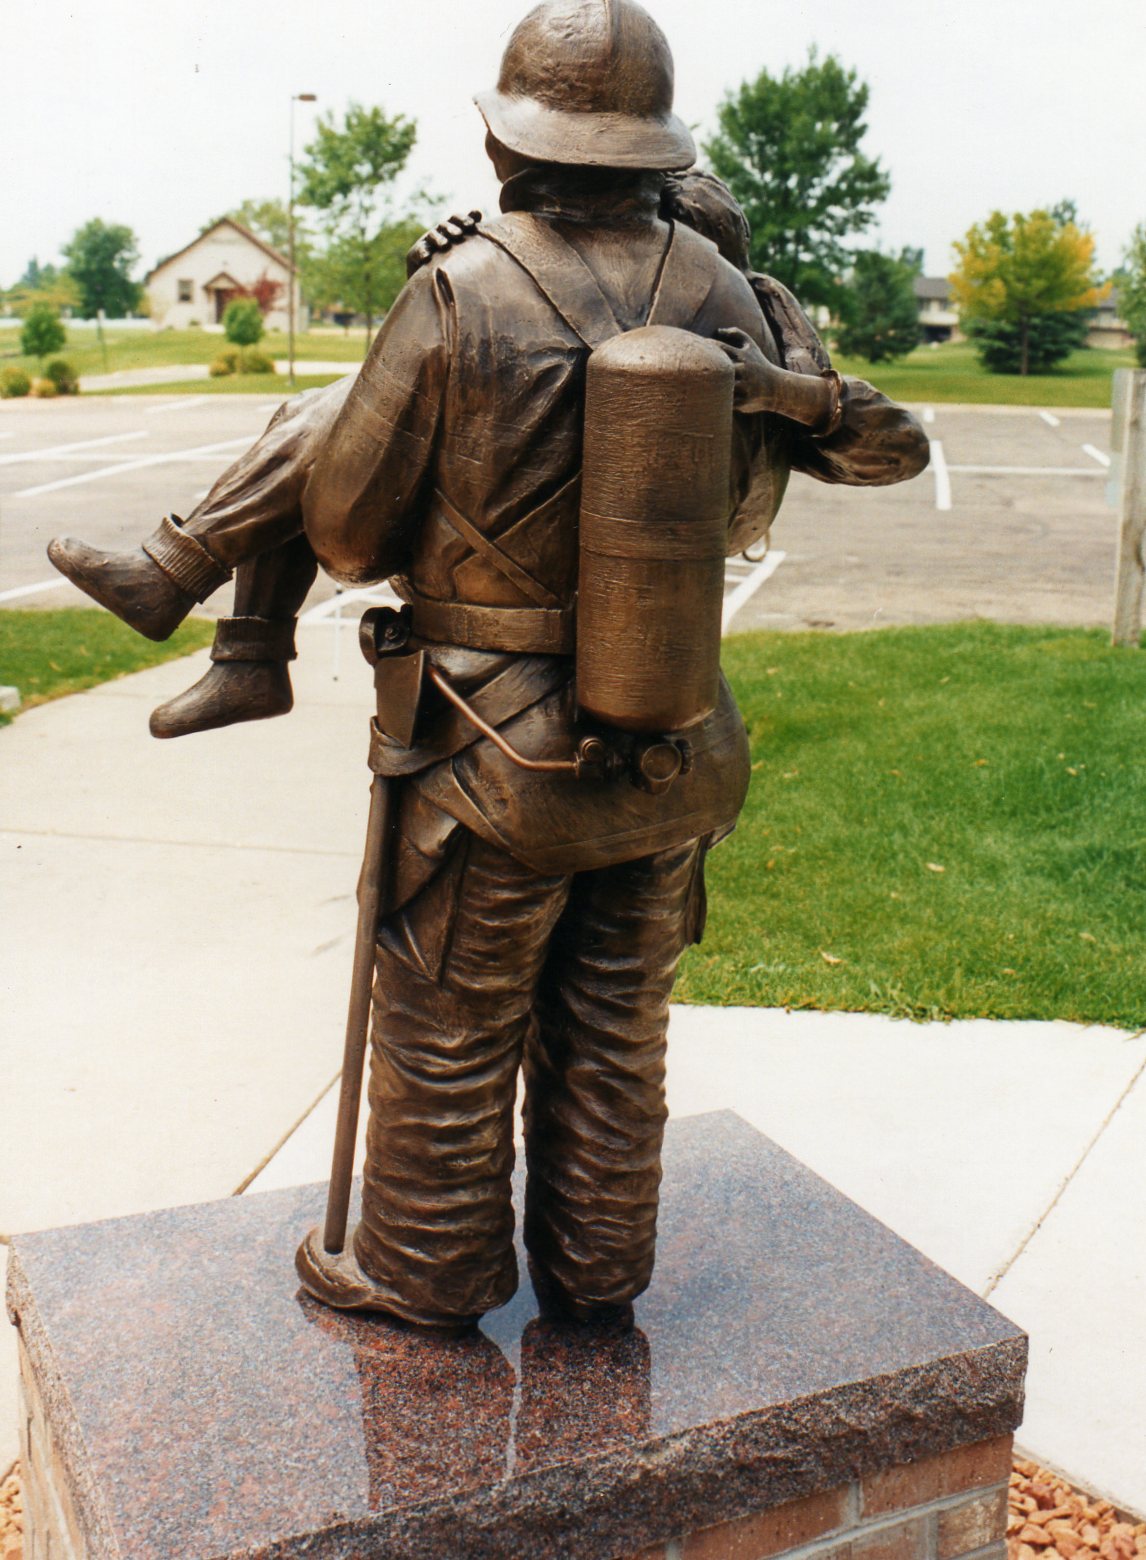 back of firefighter sculpture